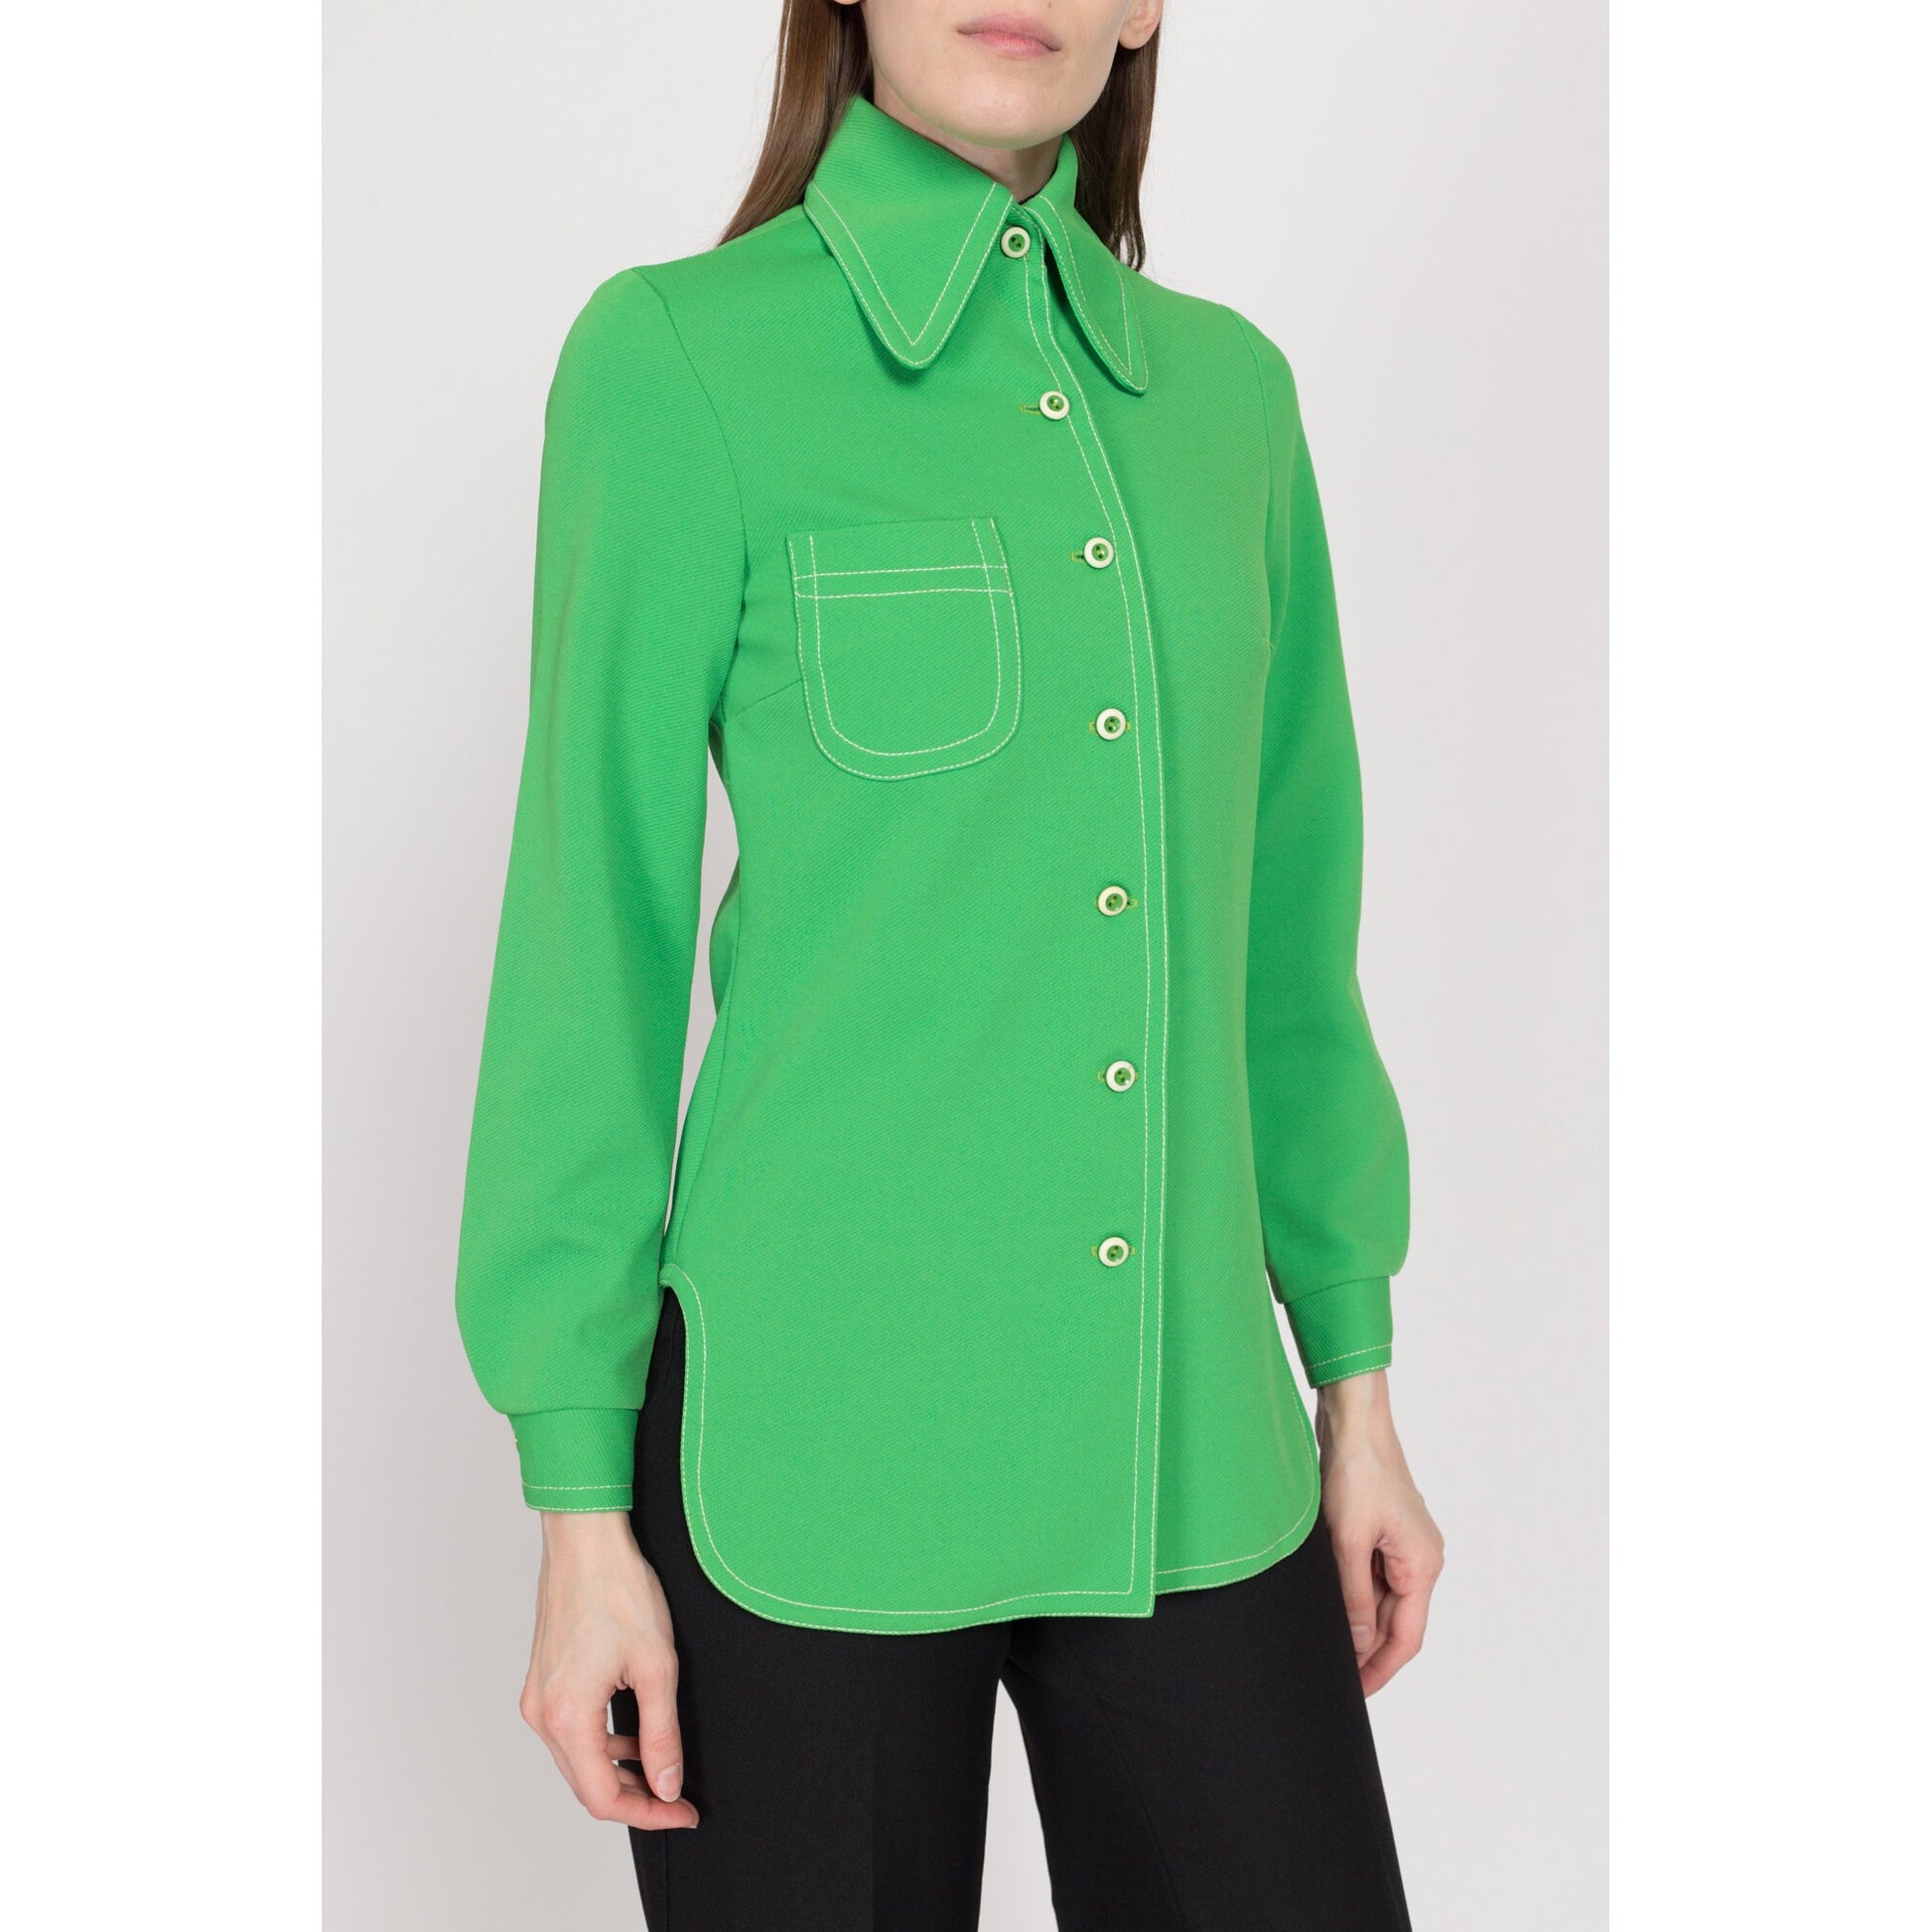 XS 60s 70s Mod Kelly Green Dog Ear Collar Shirt Jacket | Vintage Button Up Collared Shacket Overshirt